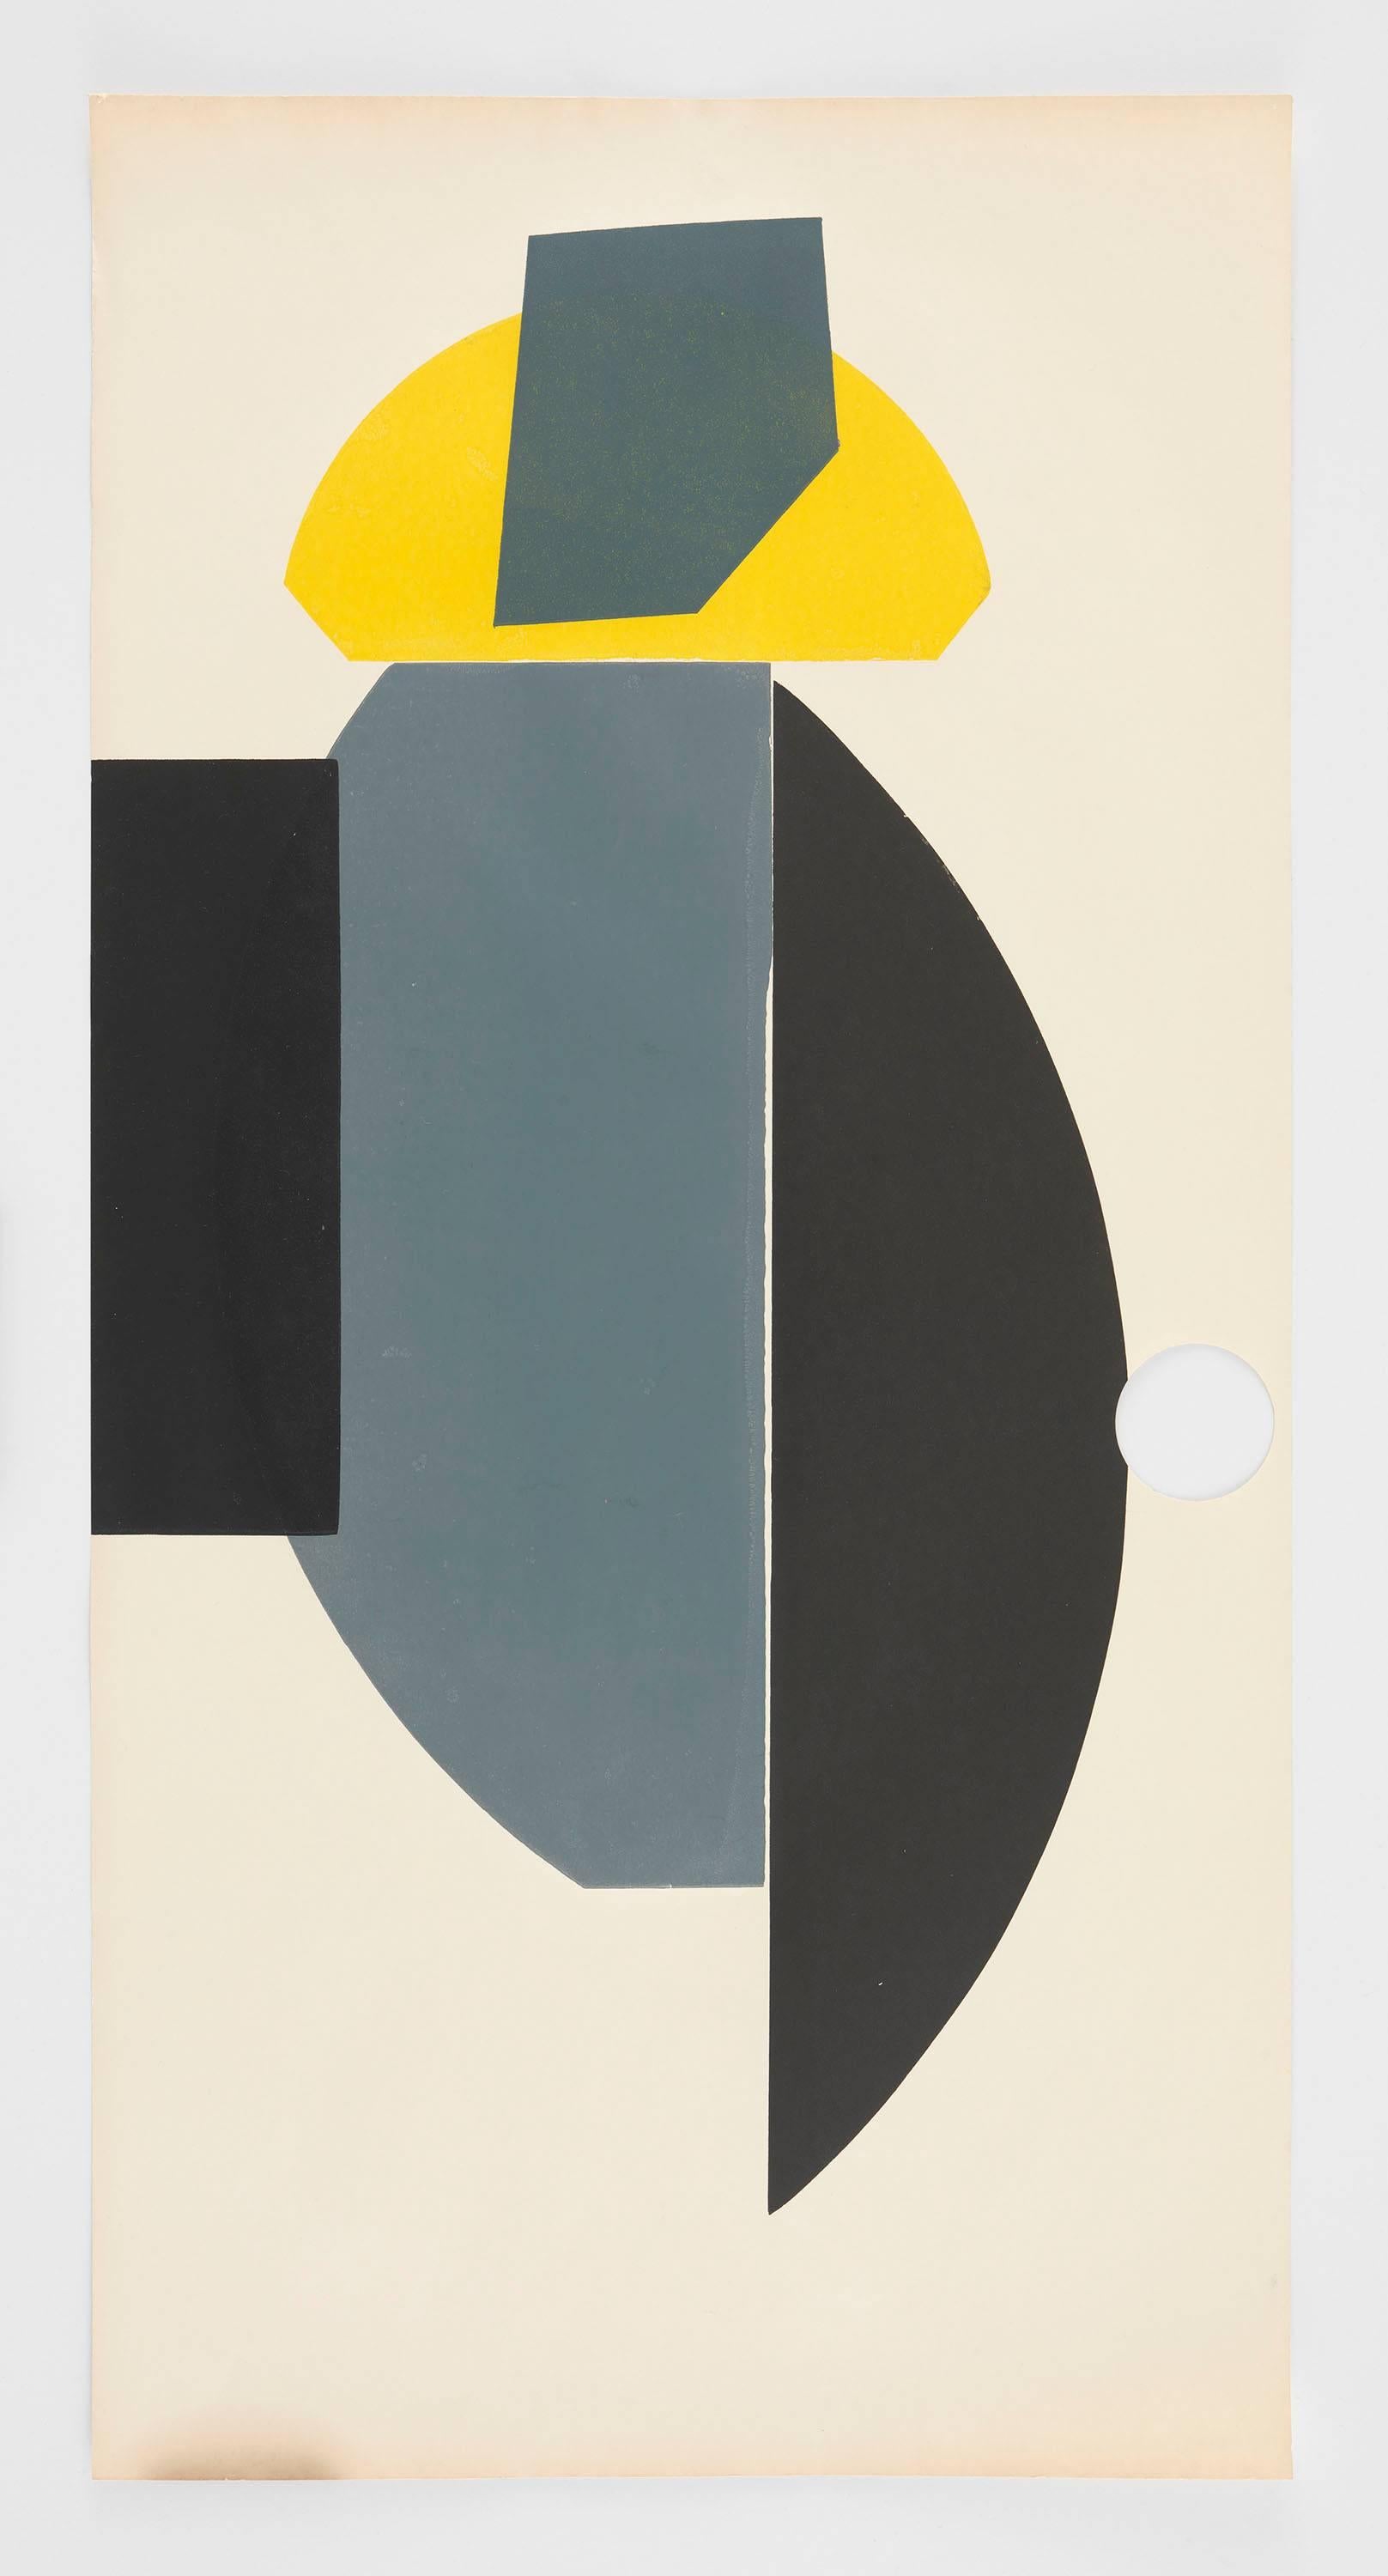 Austin Thomas Abstract Print - Hole Yellow Black Gray